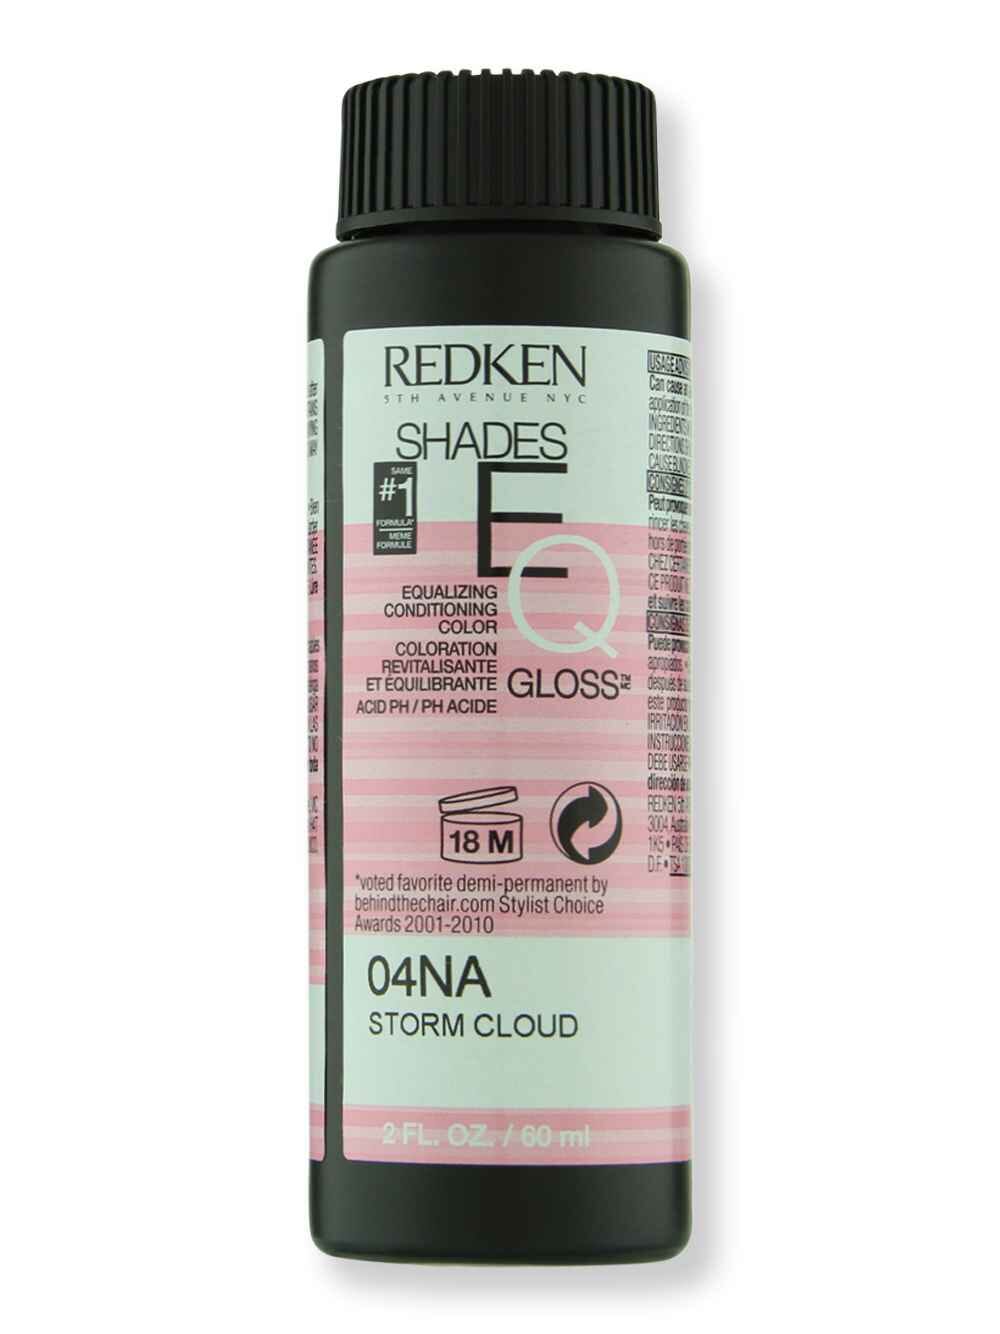 Redken Redken Shades EQ Gloss 2 oz60 ml04NA Storm Cloud Hair Color 